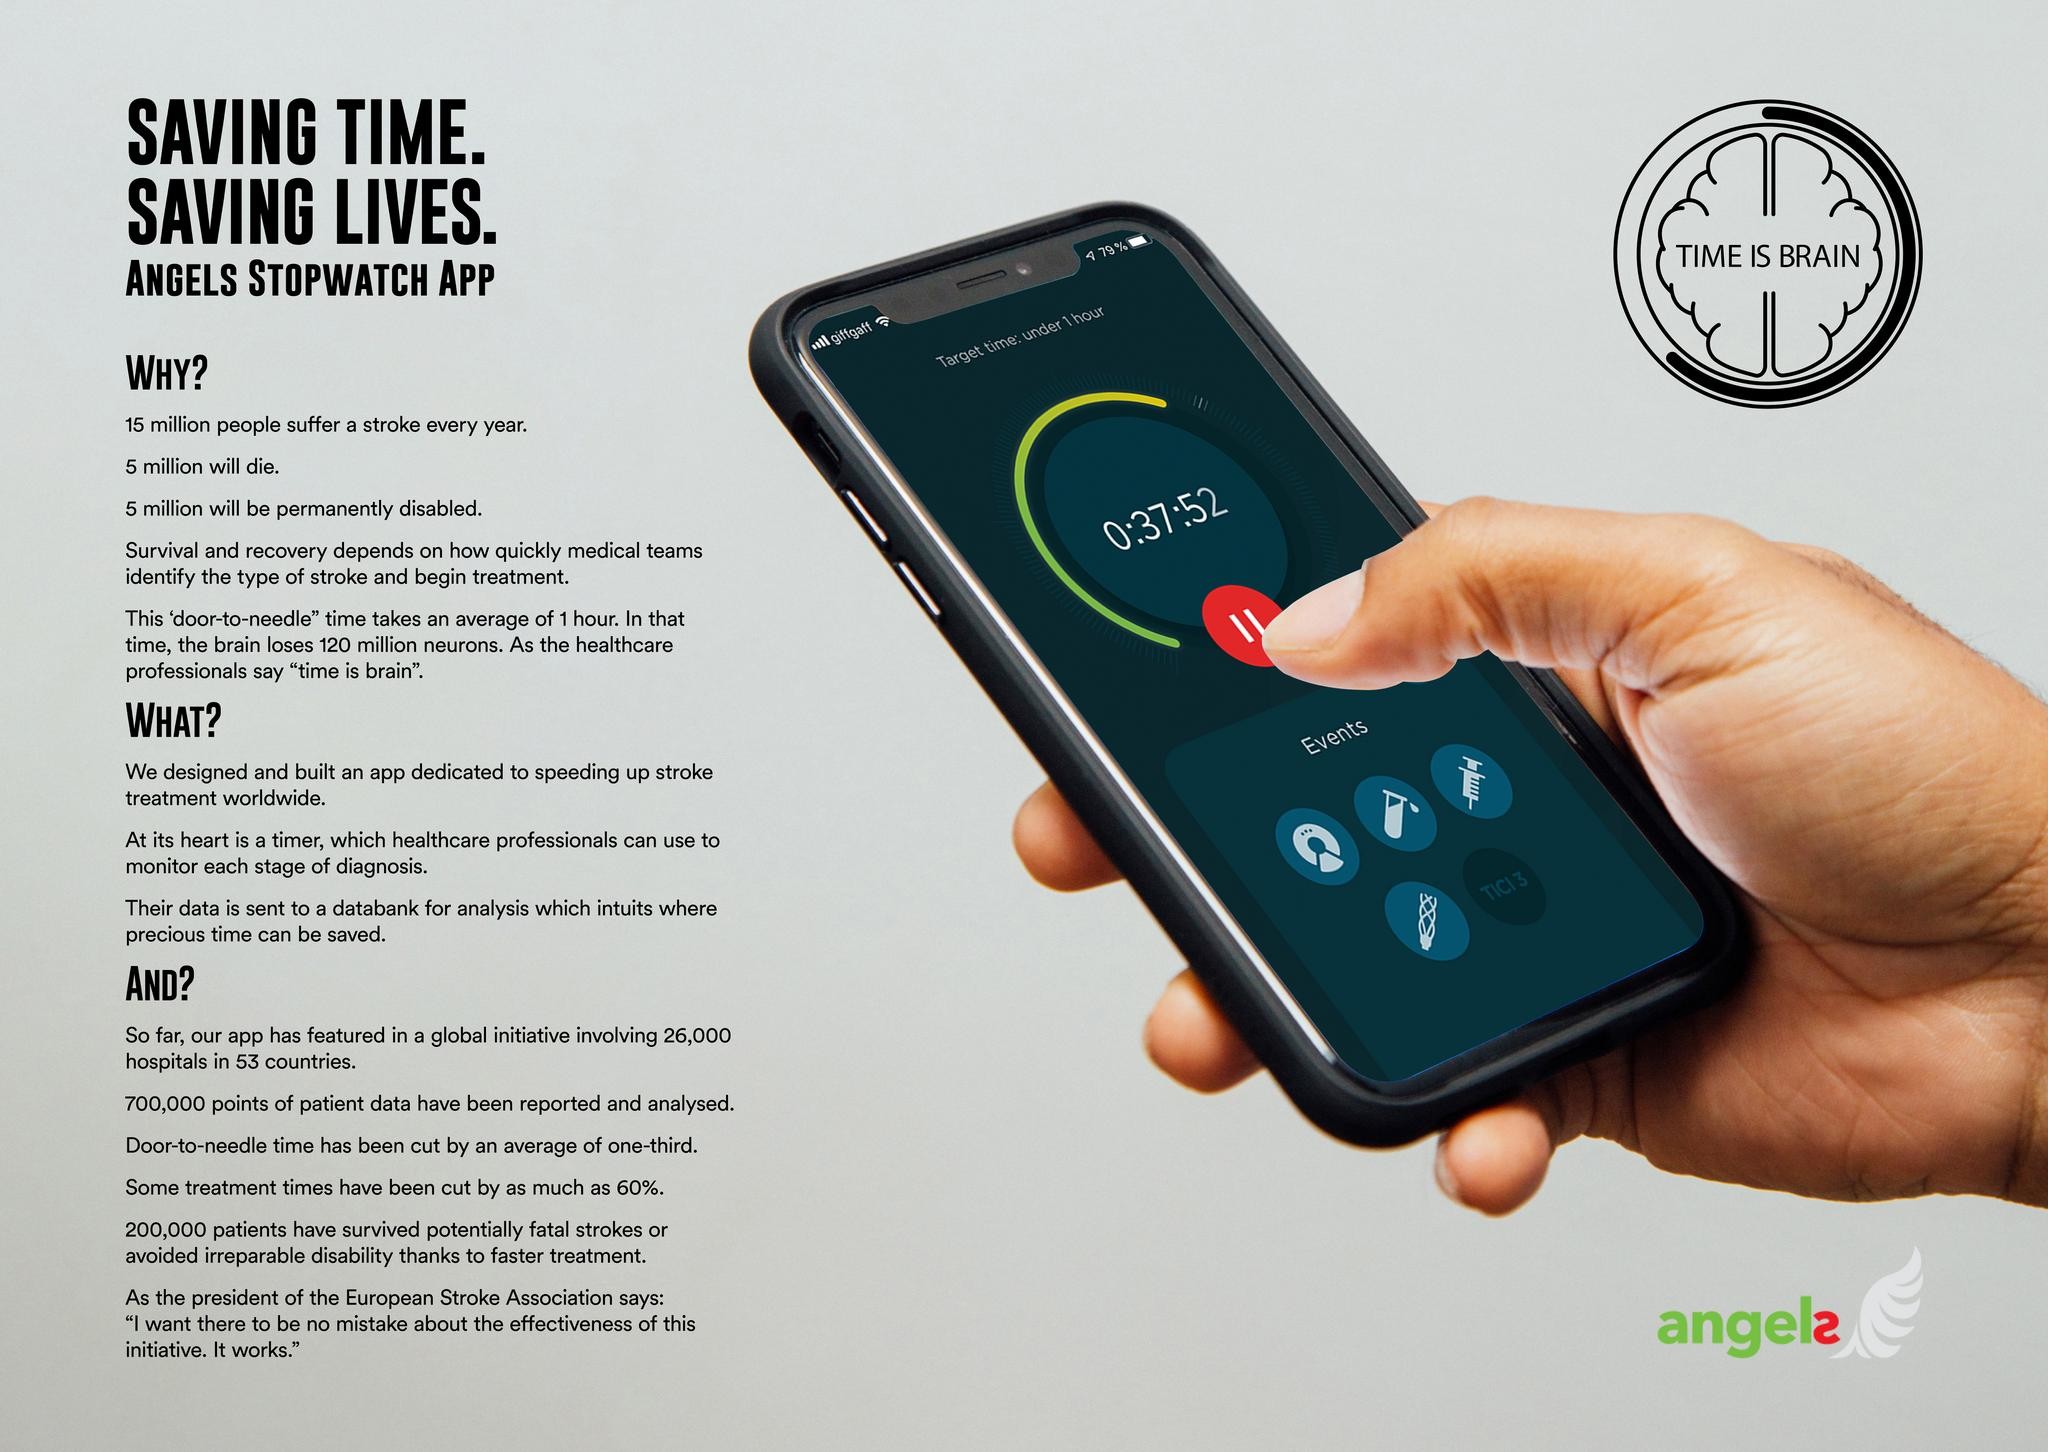 Angel's Stopwatch App